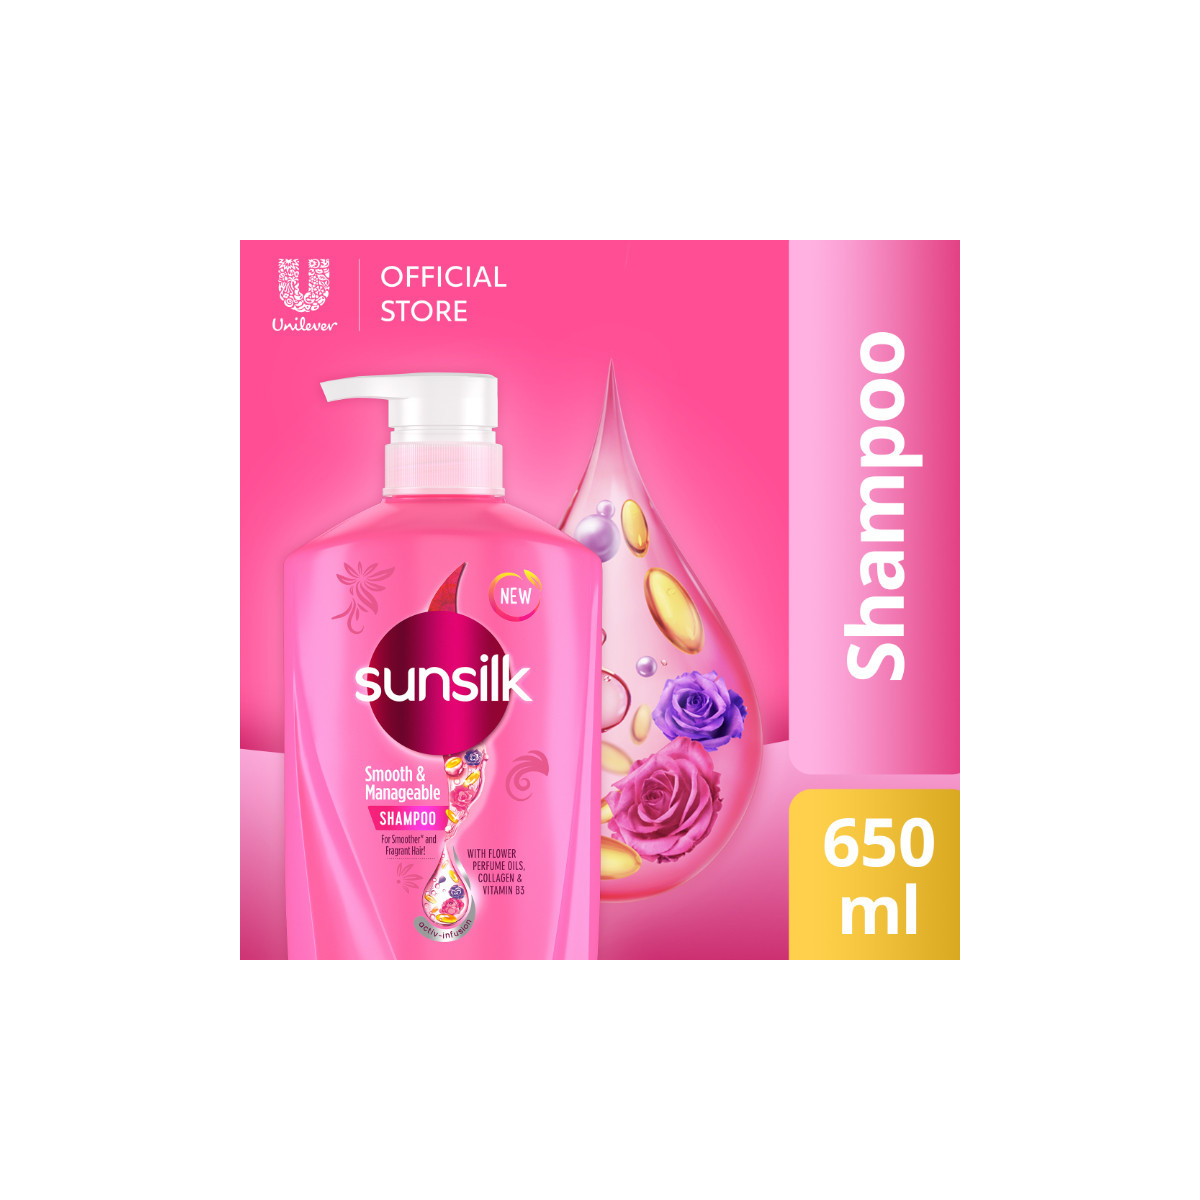 NEW Sunsilk Shampoo Smooth & Manageable 650ML